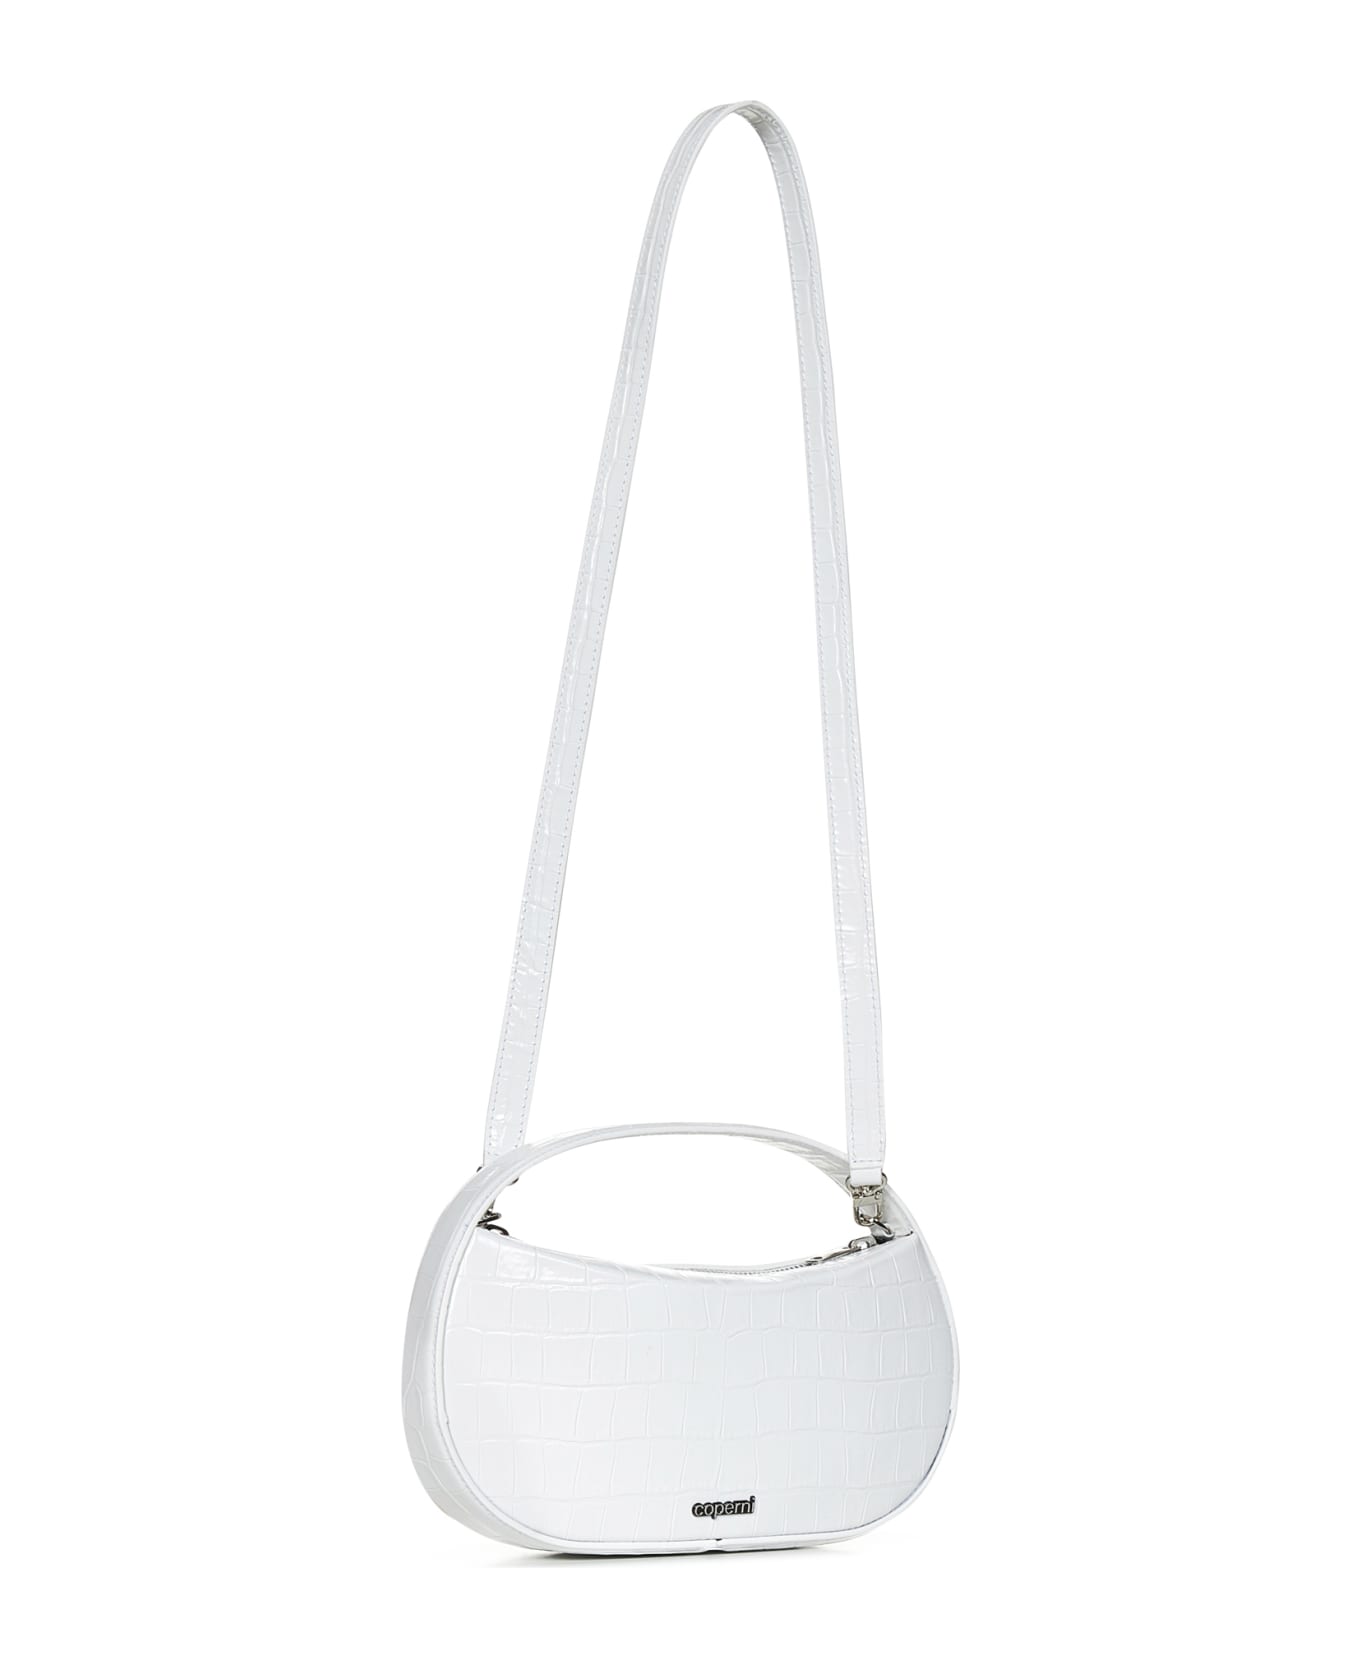 Coperni Croco Small Sound Swipe Handbag - White トートバッグ